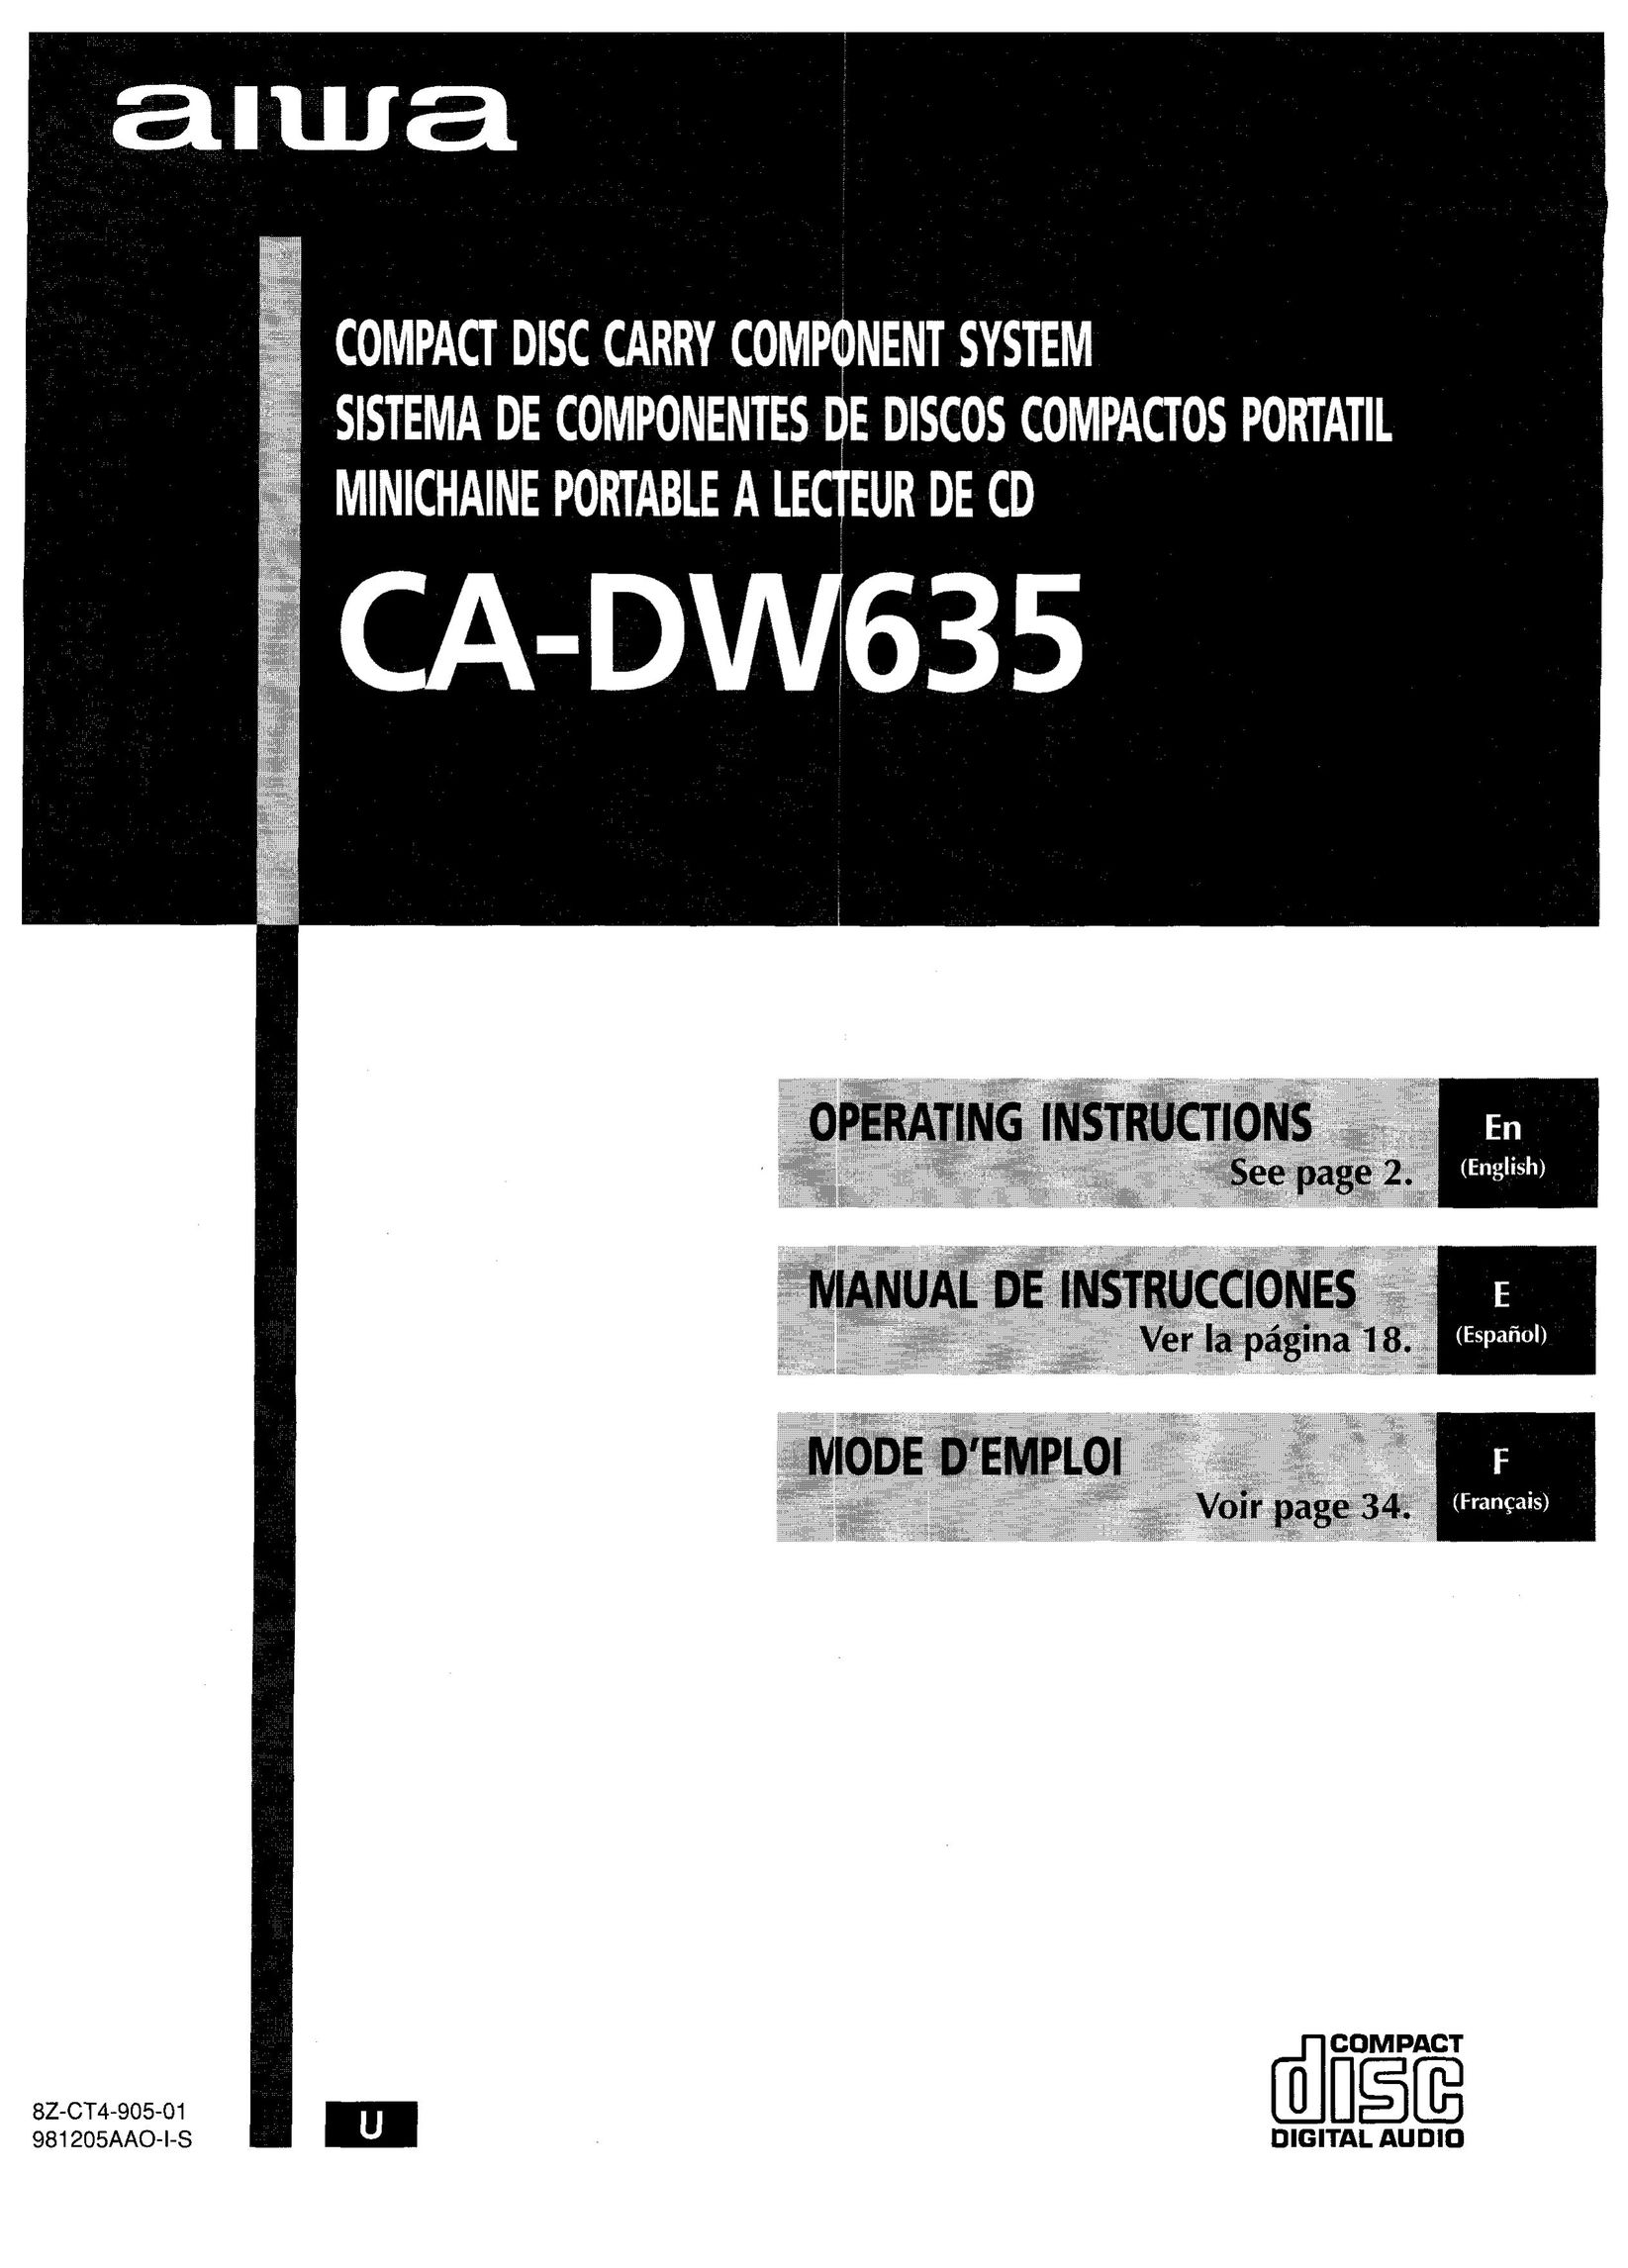 Aiwa CA-DW635 CD Player User Manual (Page 1)